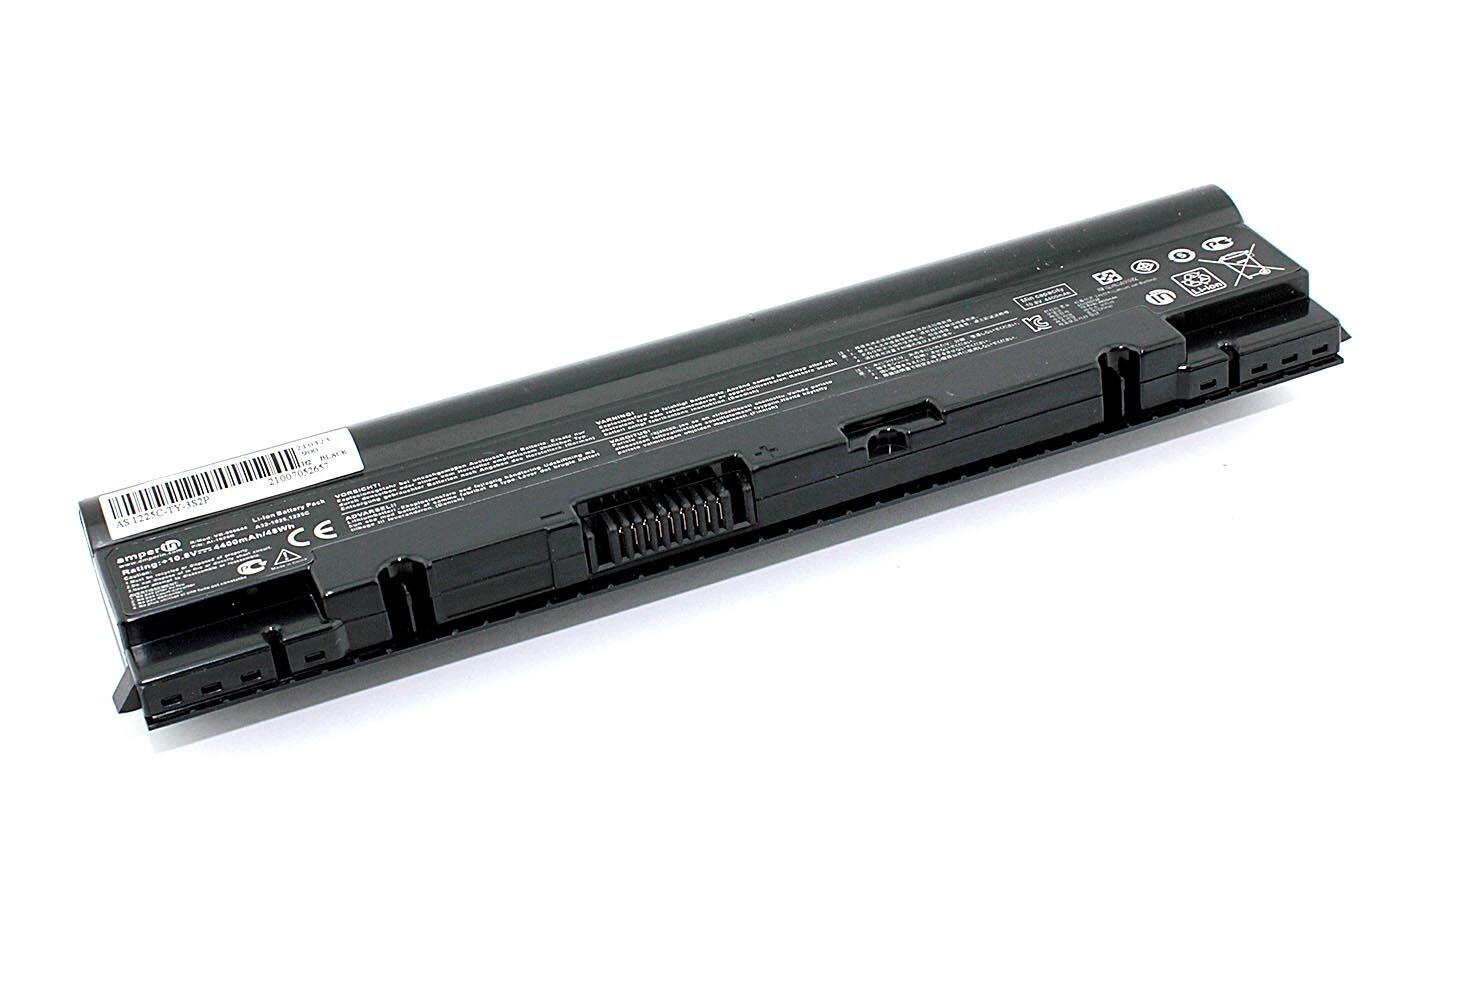 Аккумуляторная батарея Amperin для ноутбука Asus Eee PC 1025C A32-1025 11.1V 4400mAh p/n: AI-1025B